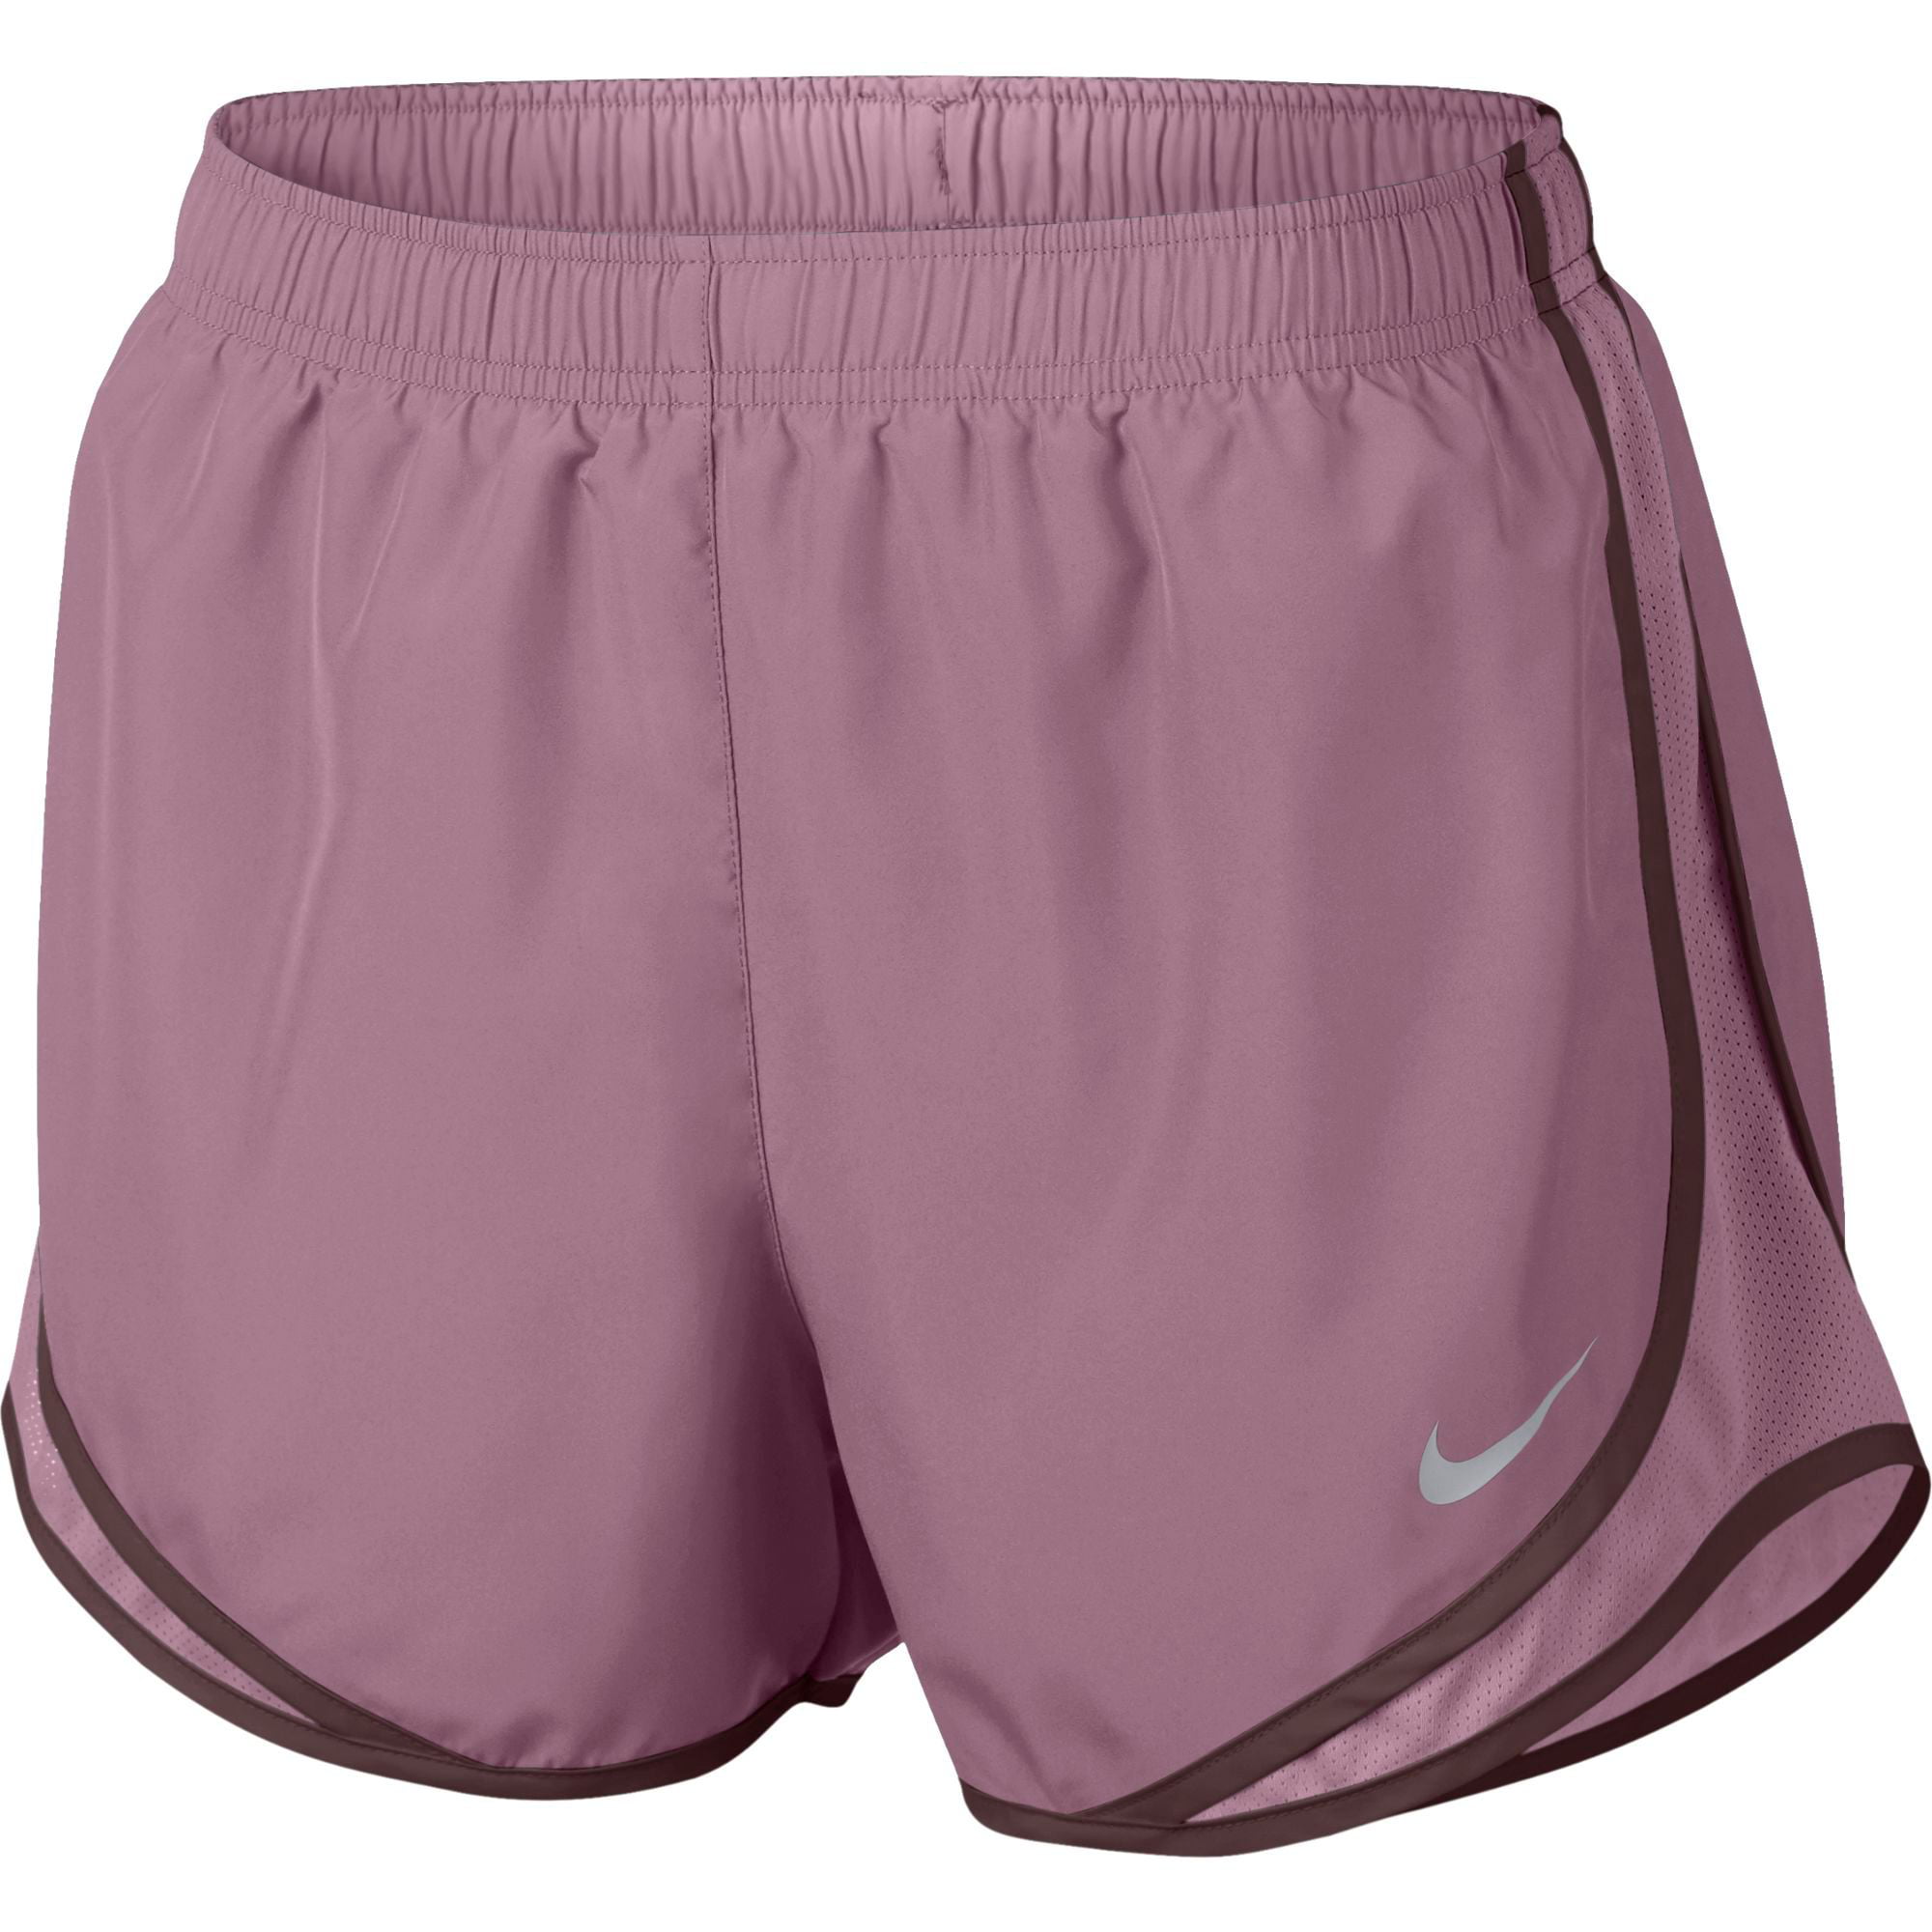 Nike - Nike Women's Dry 3'' Tempo Running Shorts - Walmart.com ...